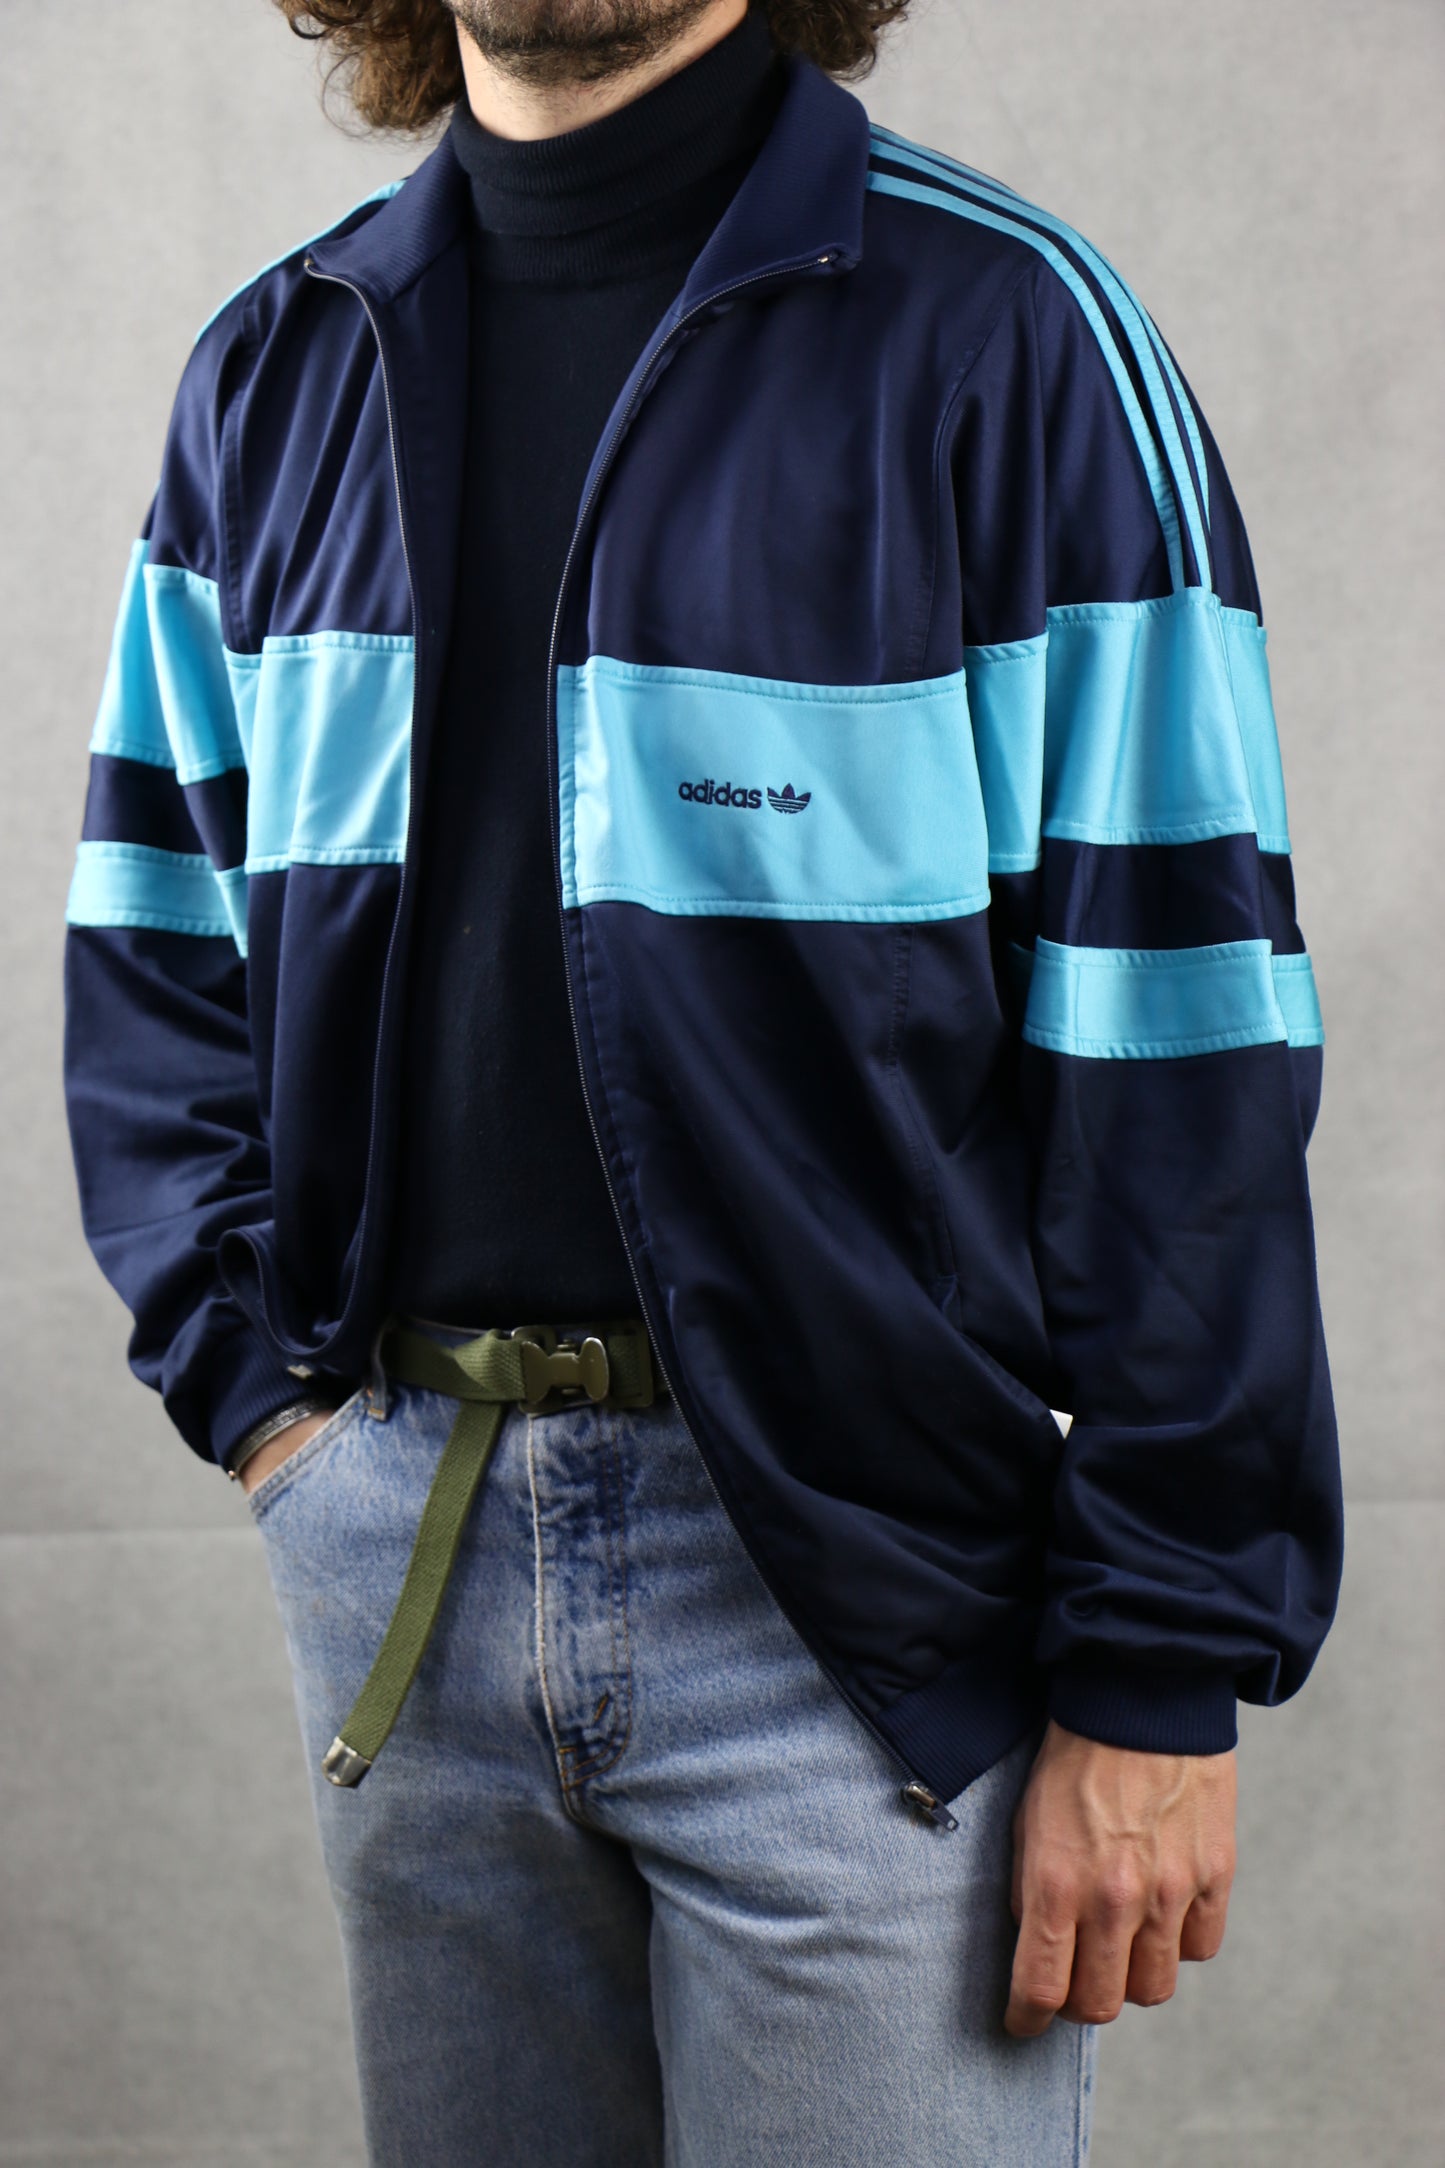 Adidas Track Jacket - Vintage clothing clochard92.com